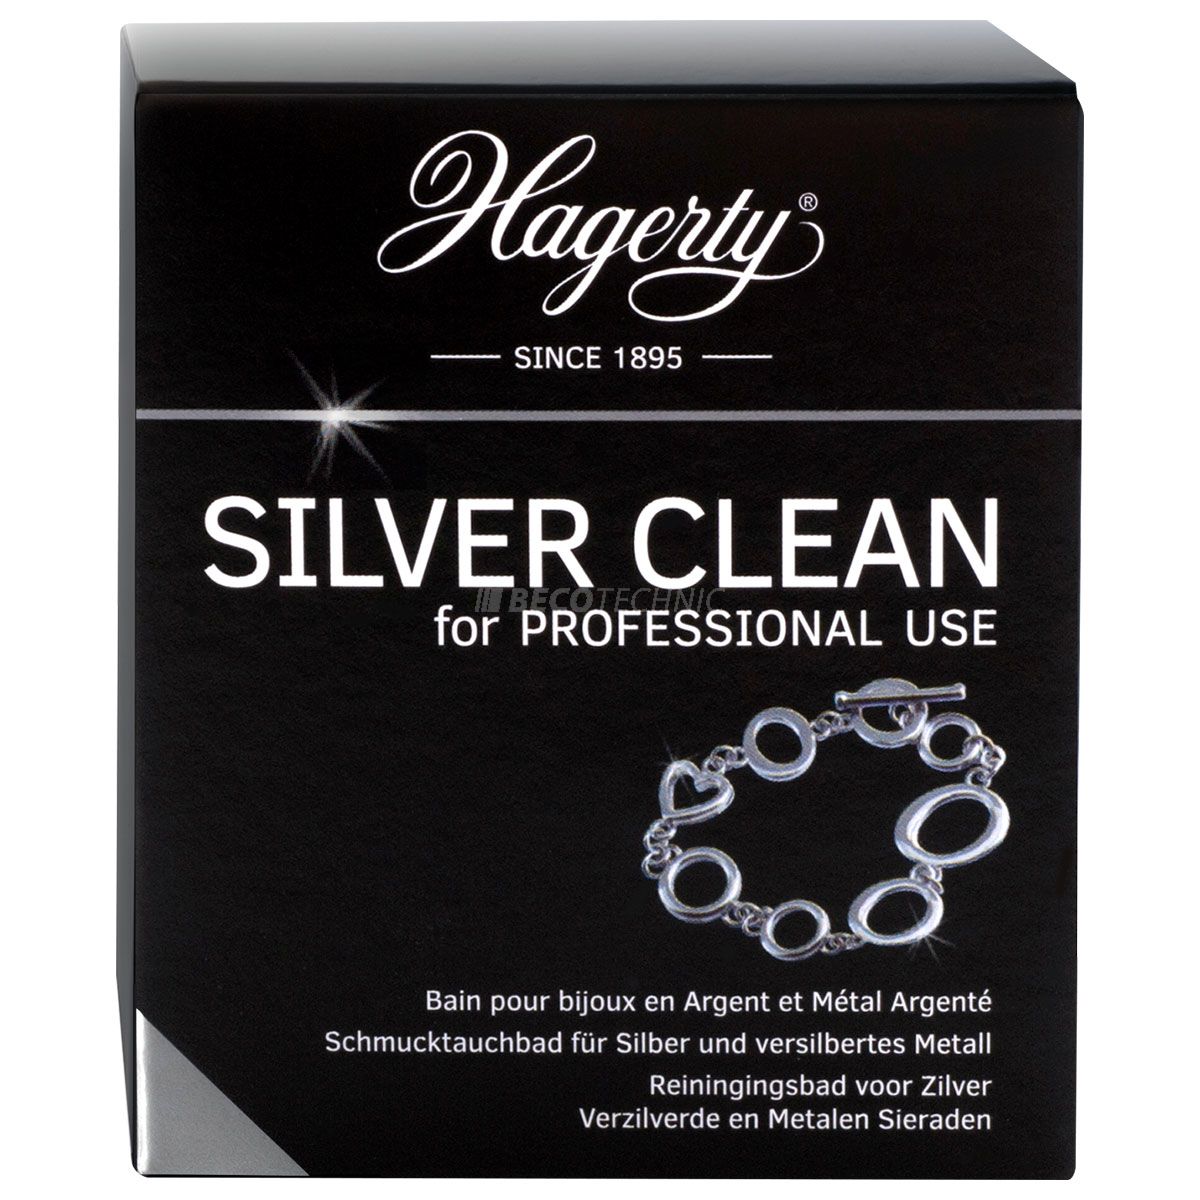 Hagerty Silver Clean Professional, Tauchbad für Silber, 170 ml